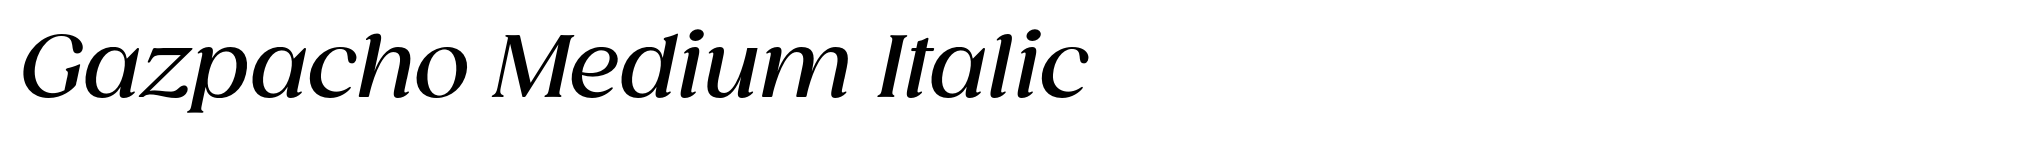 Gazpacho Medium Italic image